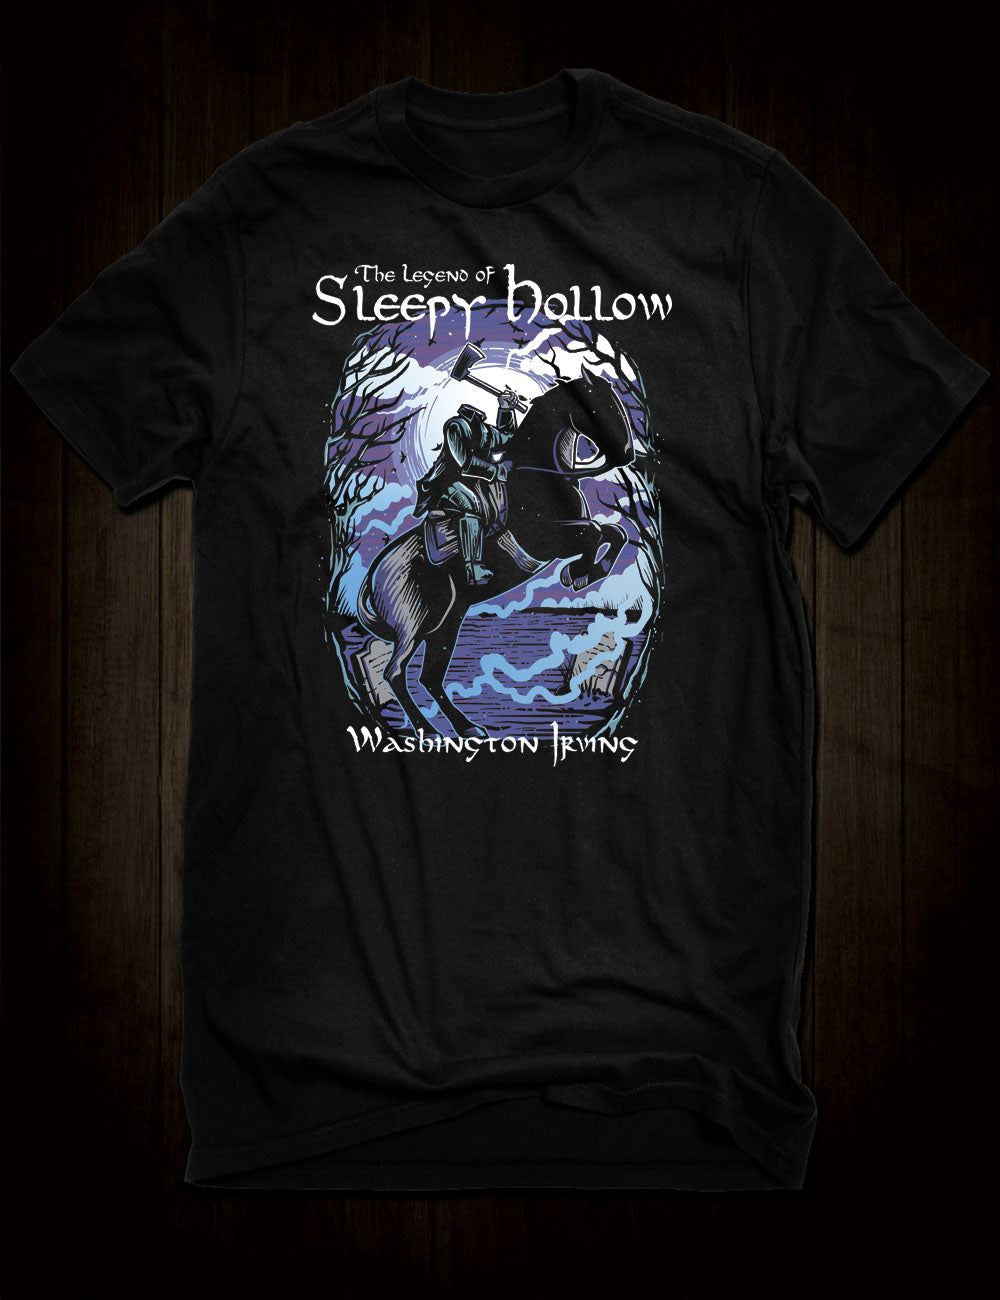 The Legend Of Sleepy Hollow T-Shirt Washington Irving